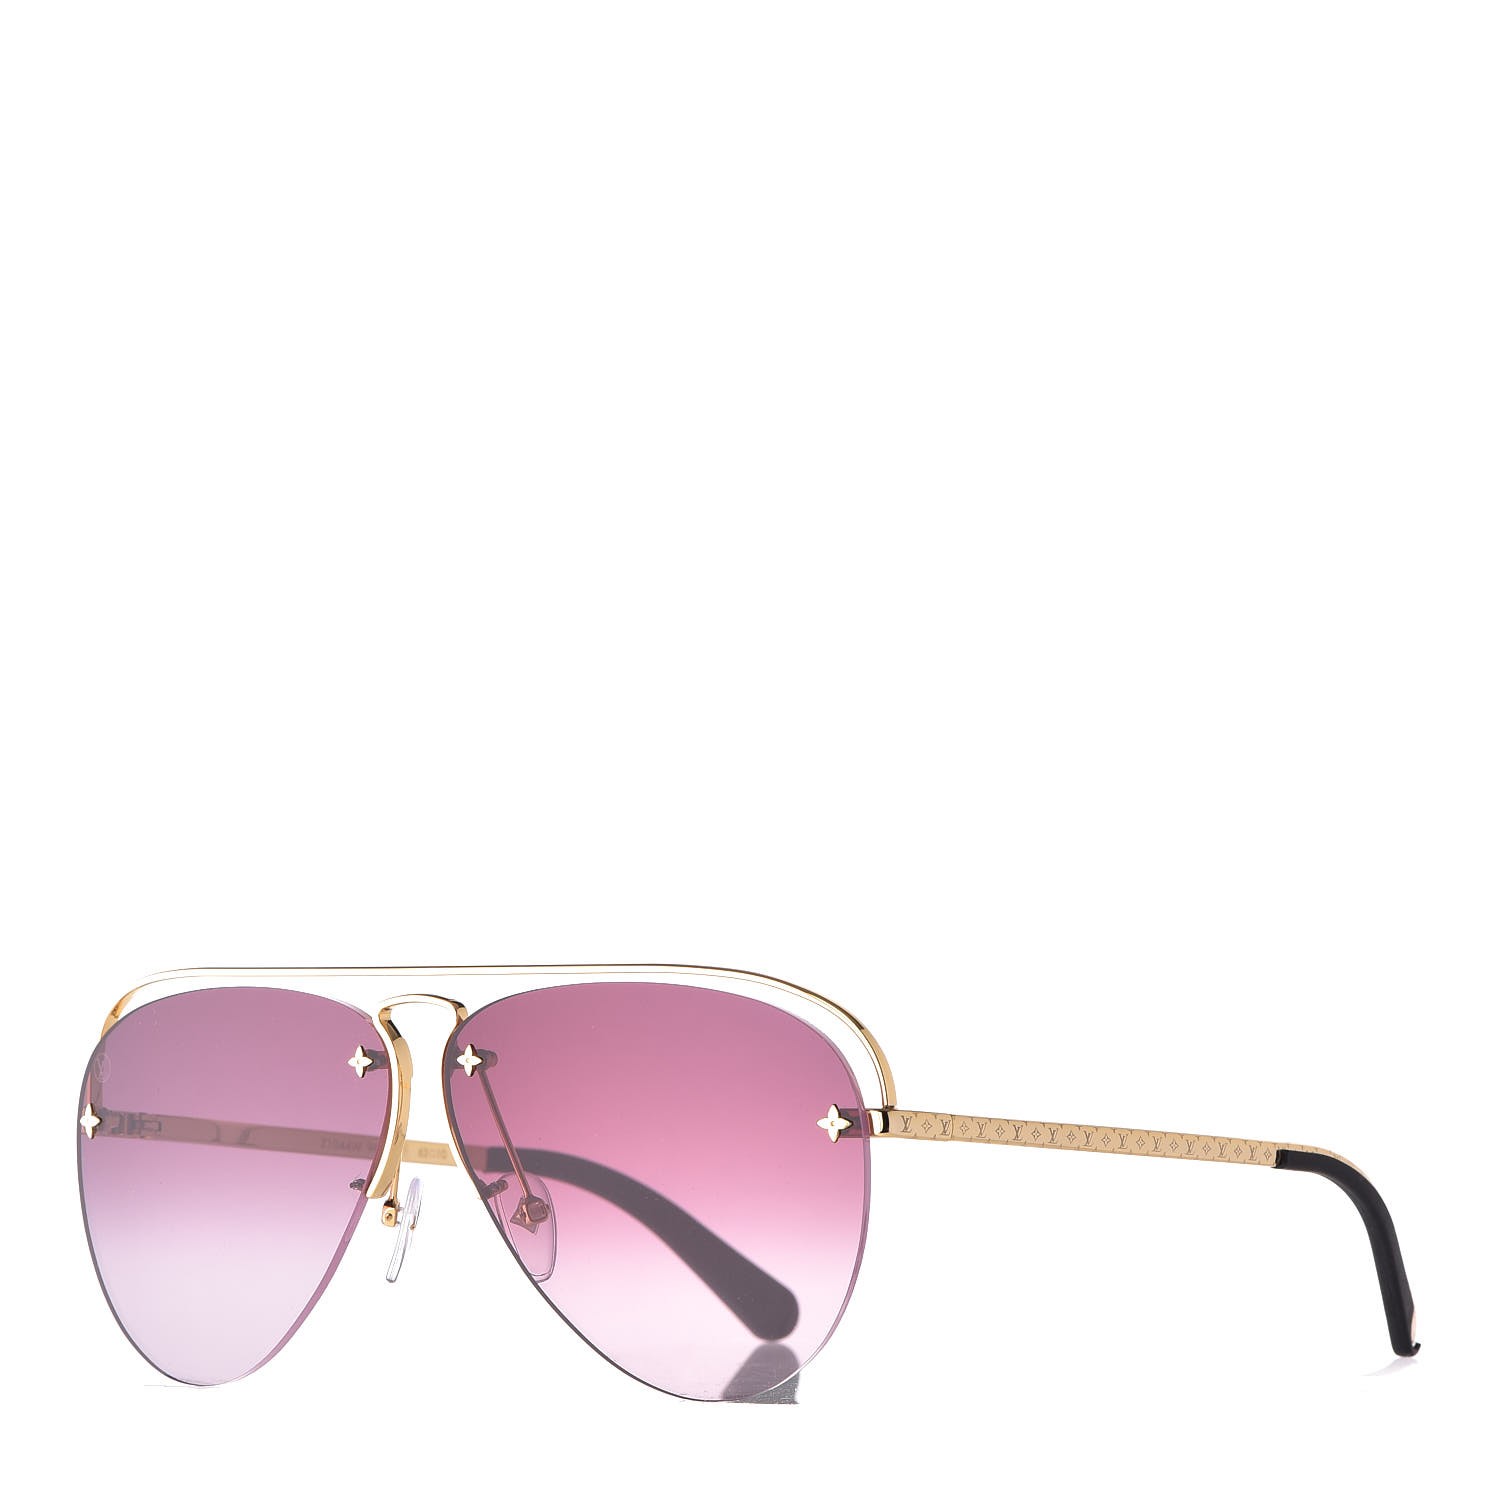 Grease Sunglasses S00 - Accessories